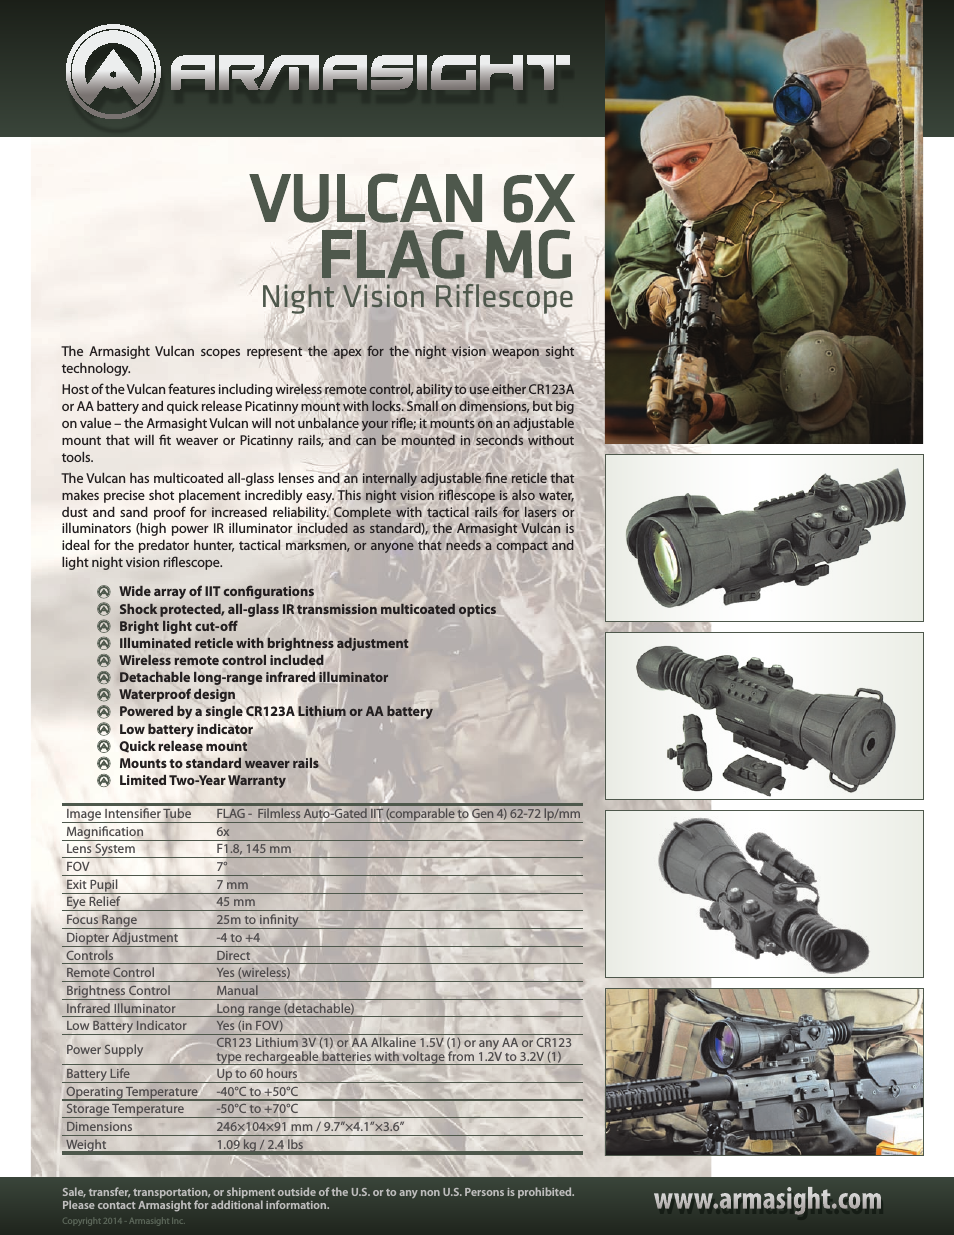 NRWVULCAN6F9DA1 Vulcan 6x FLAG MG Night Vision Riflescope